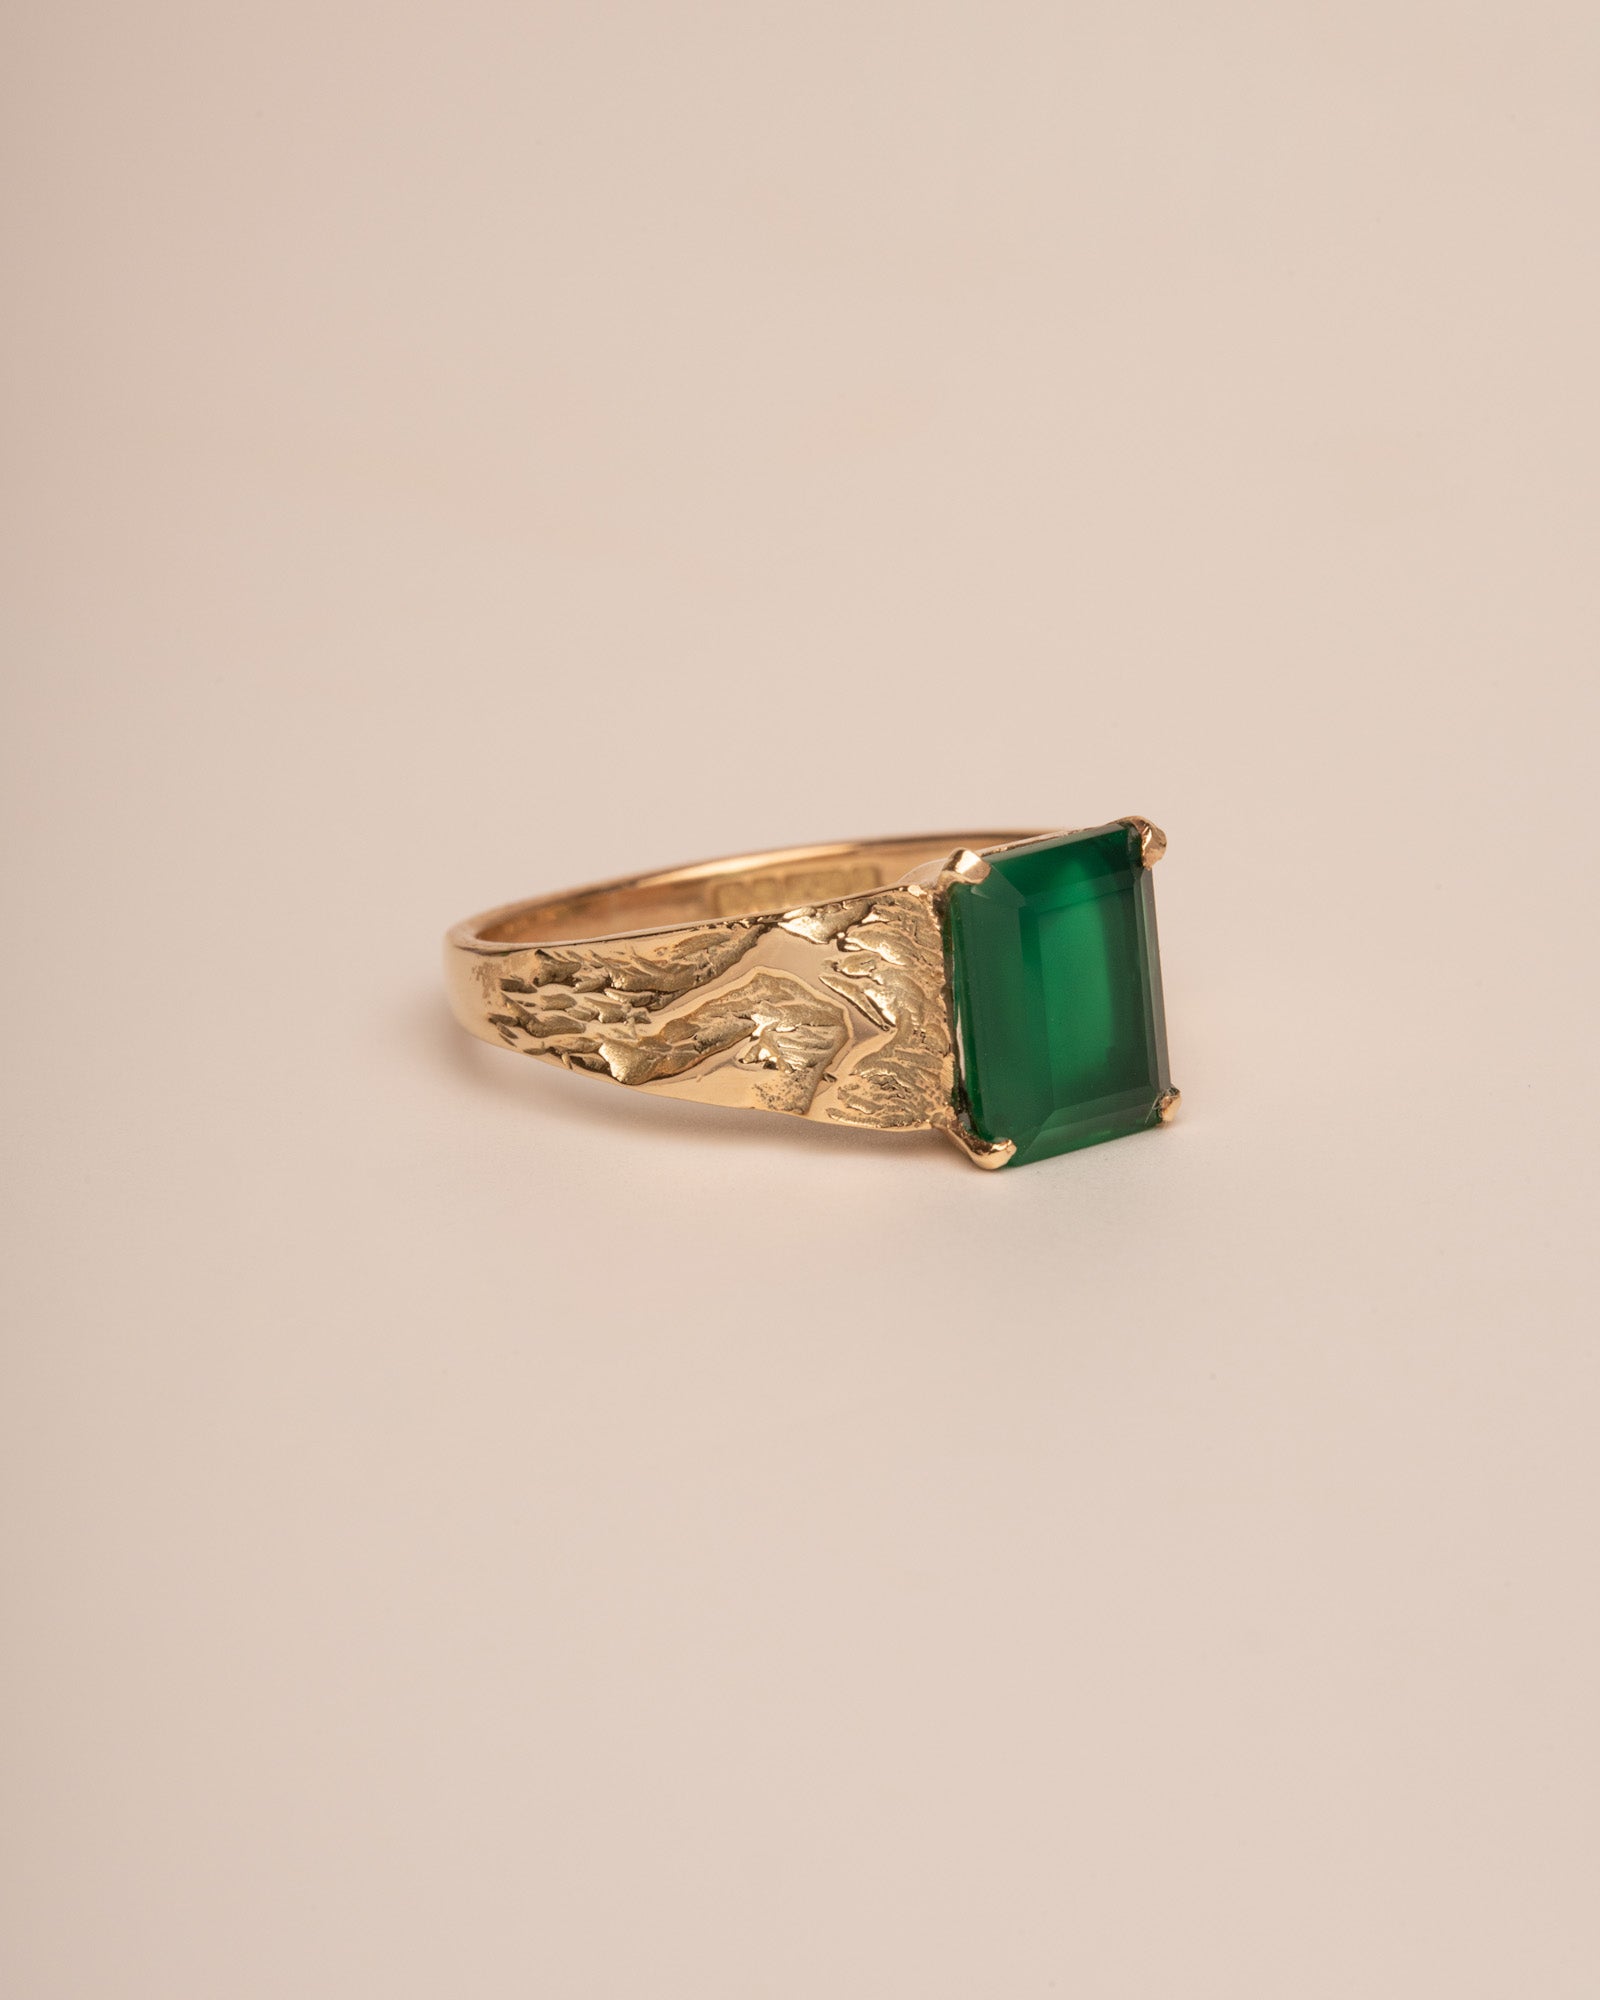 Elizabeth 9ct Gold Emerald Ring